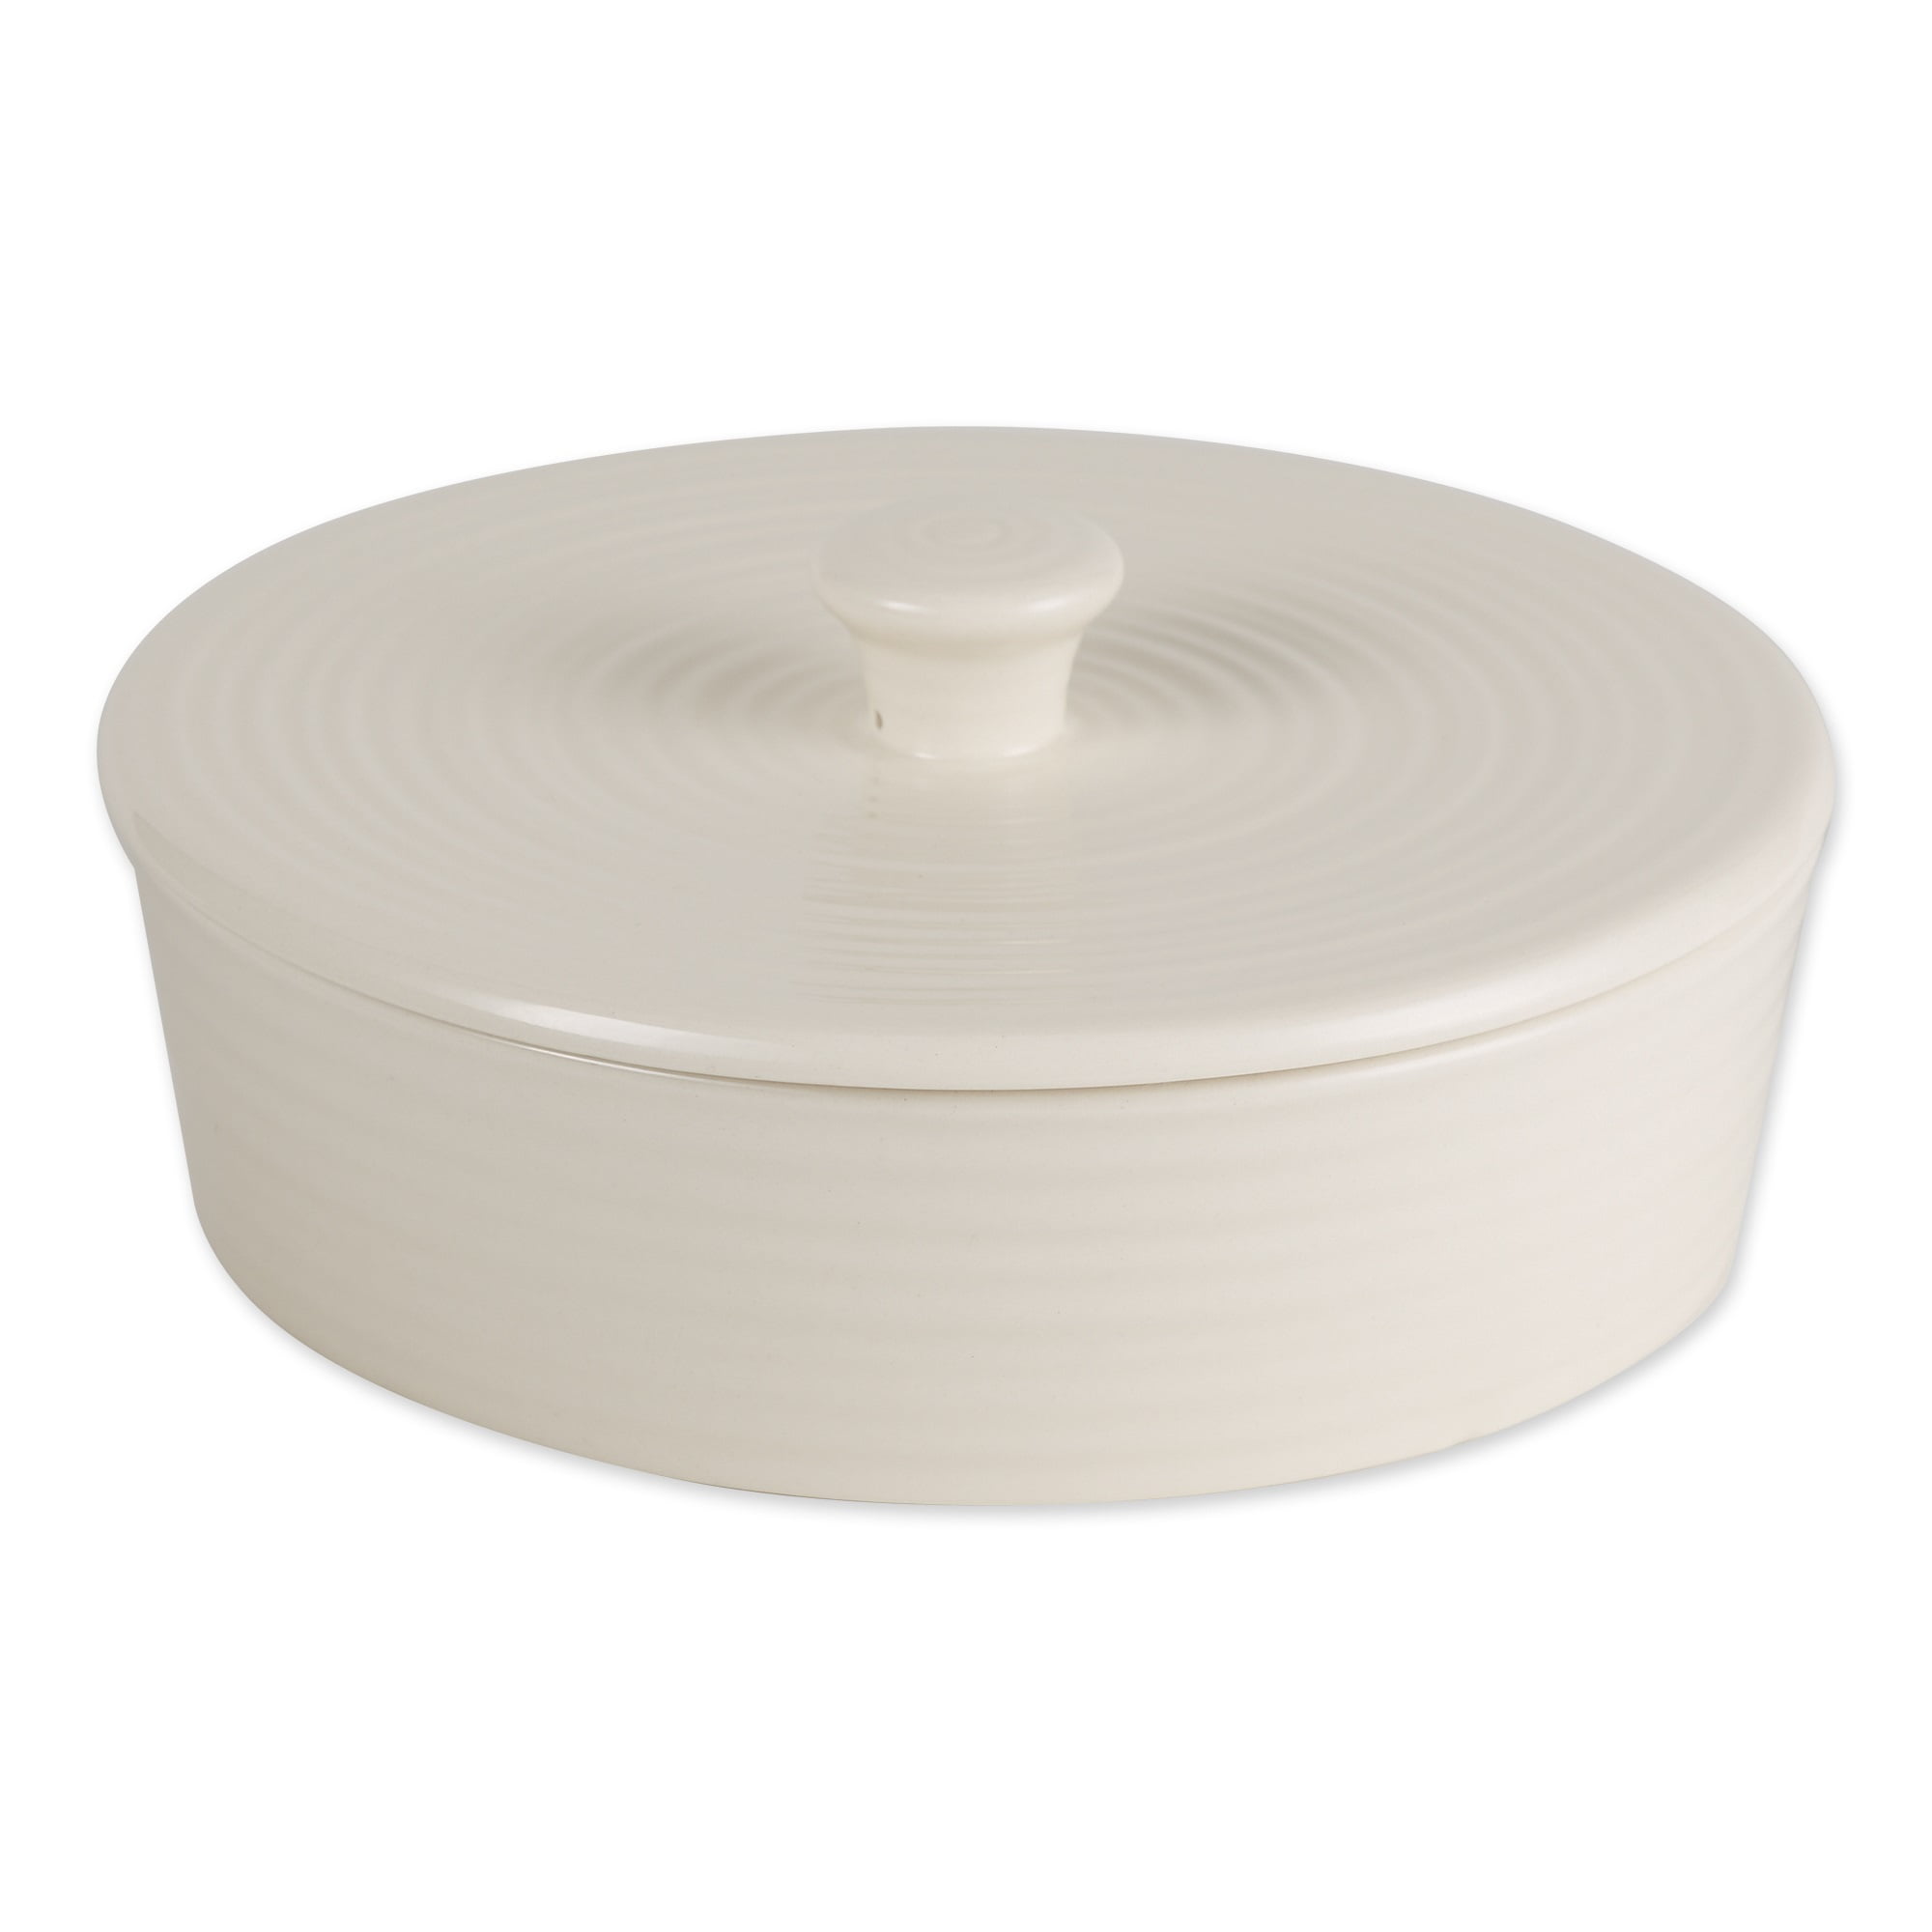 RSVP Stoneware Tortilla Warmer White 8-inch SYNCHKG025264 